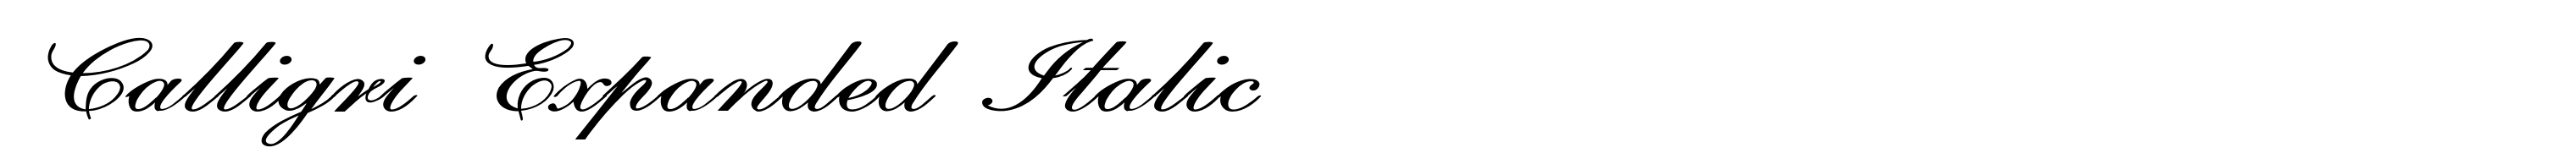 Calligri Expanded Italic